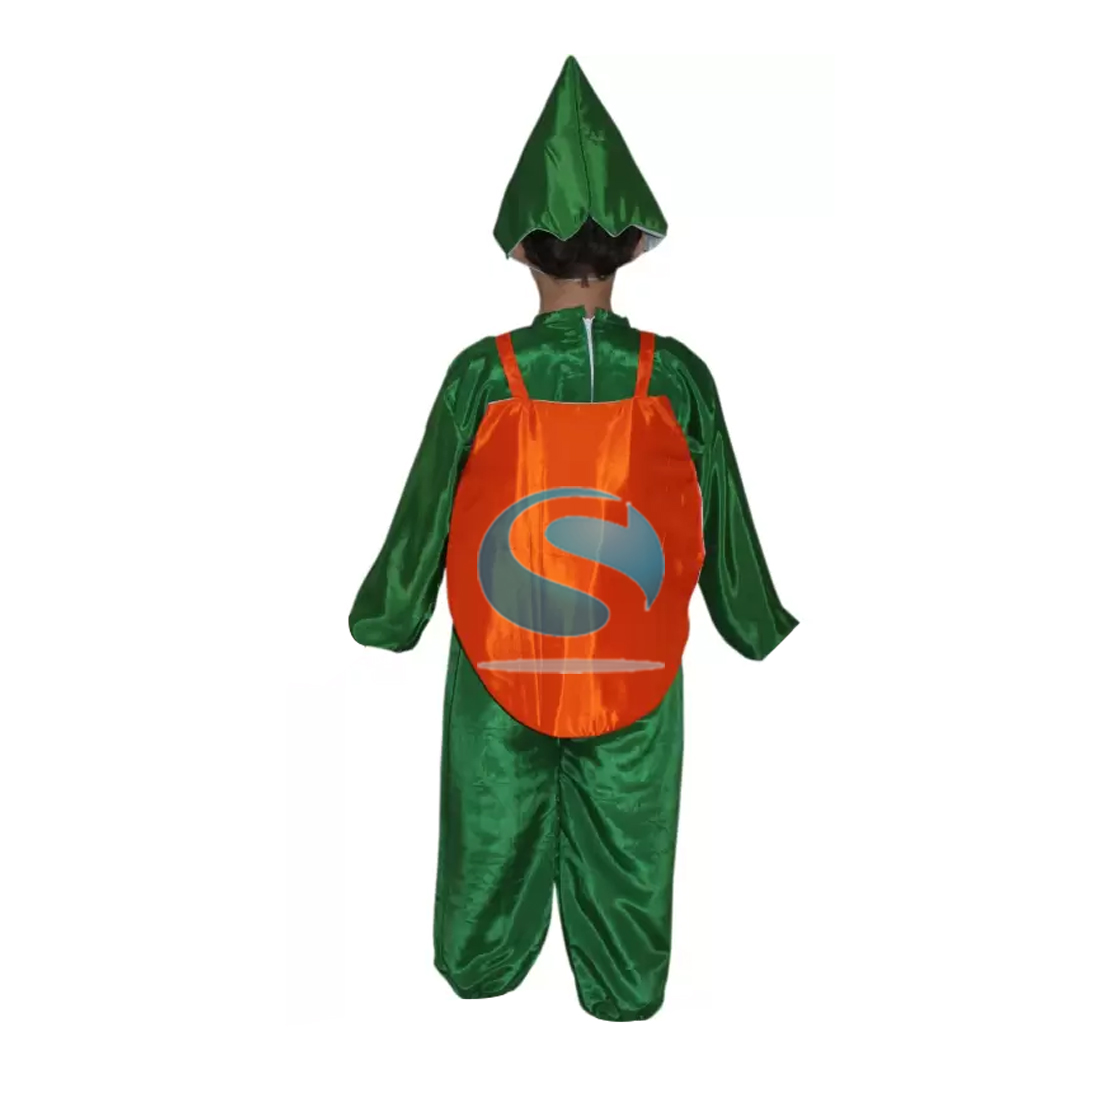 Kids Funny Orange Fruit Mascot Costumes| Alibaba.com